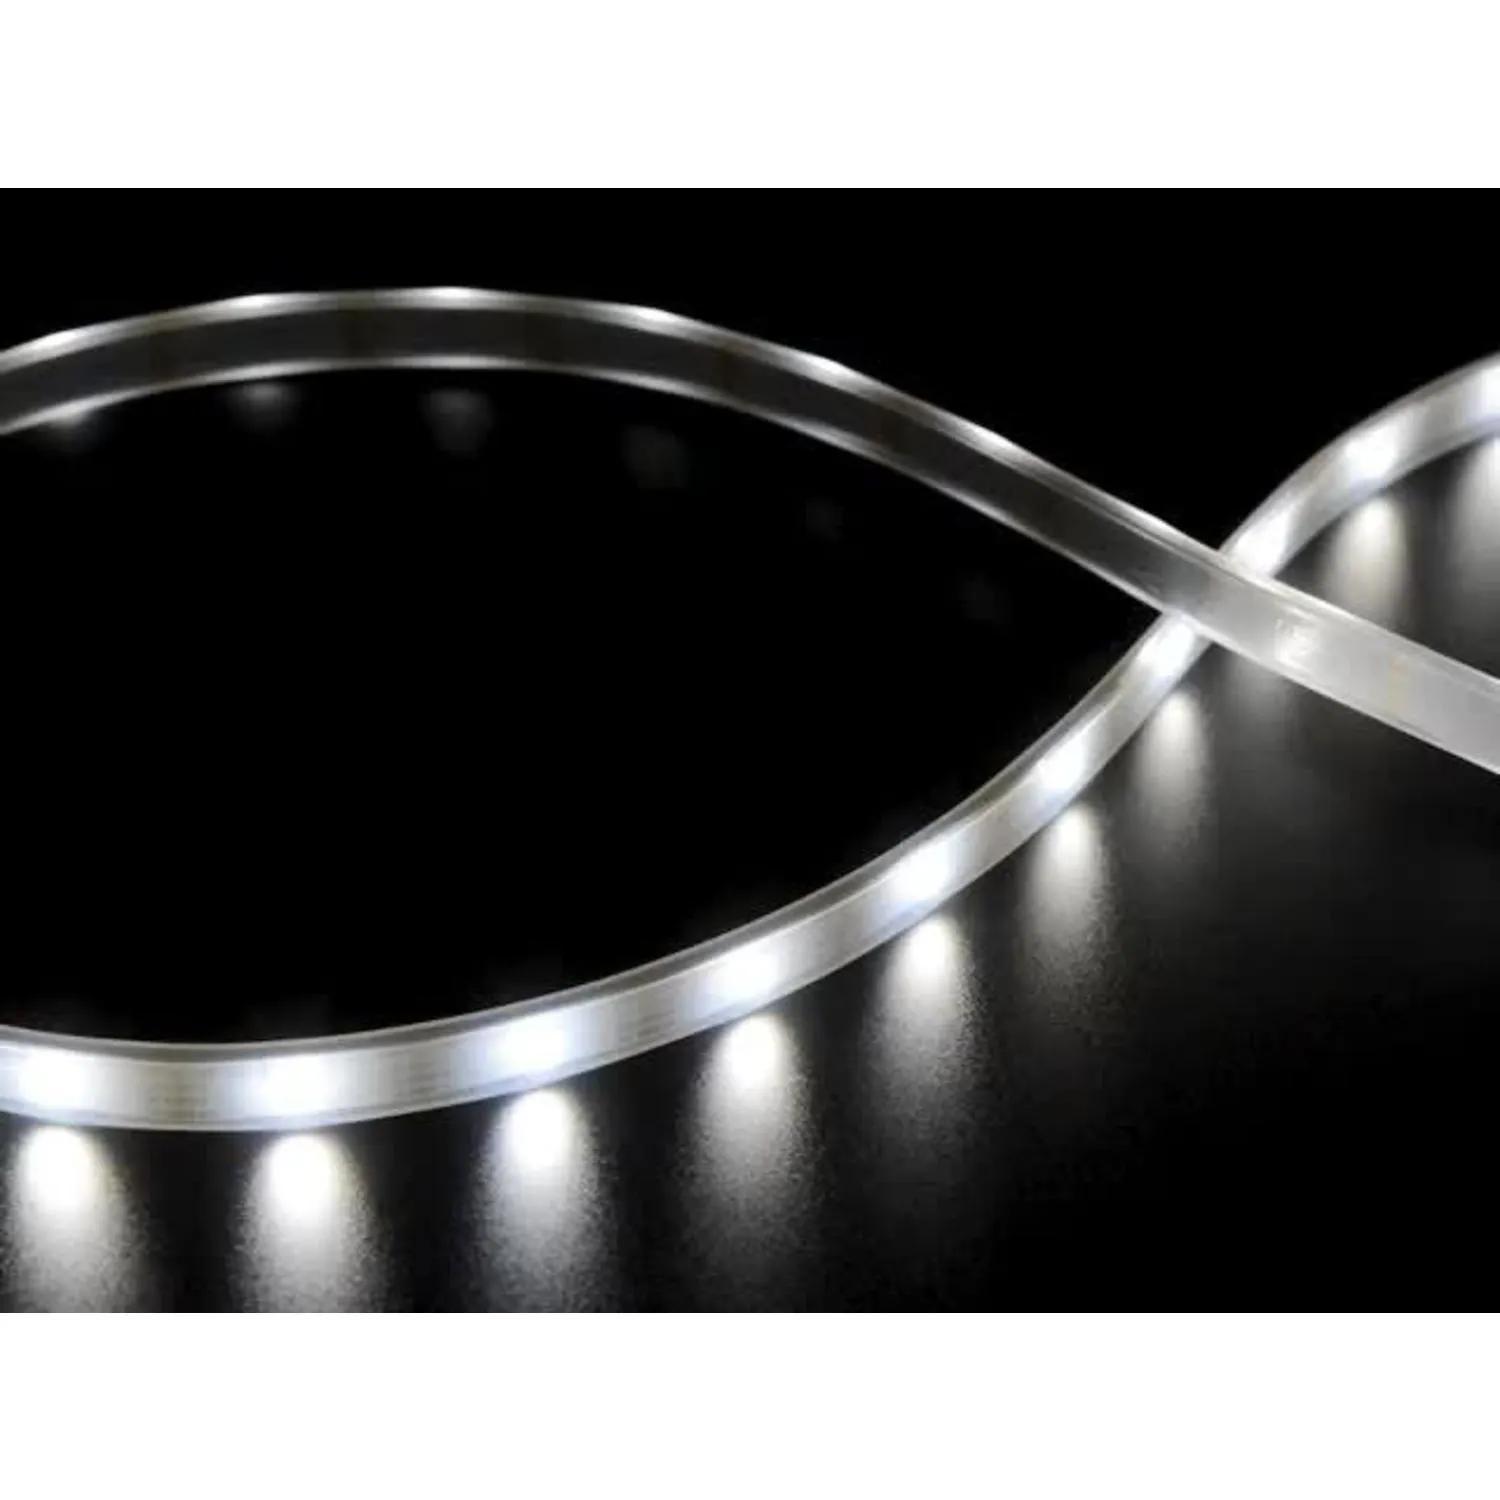 Photo of Adafruit DotStar LED Strip - APA102 Cool White - 60 LED/m [~6000K]